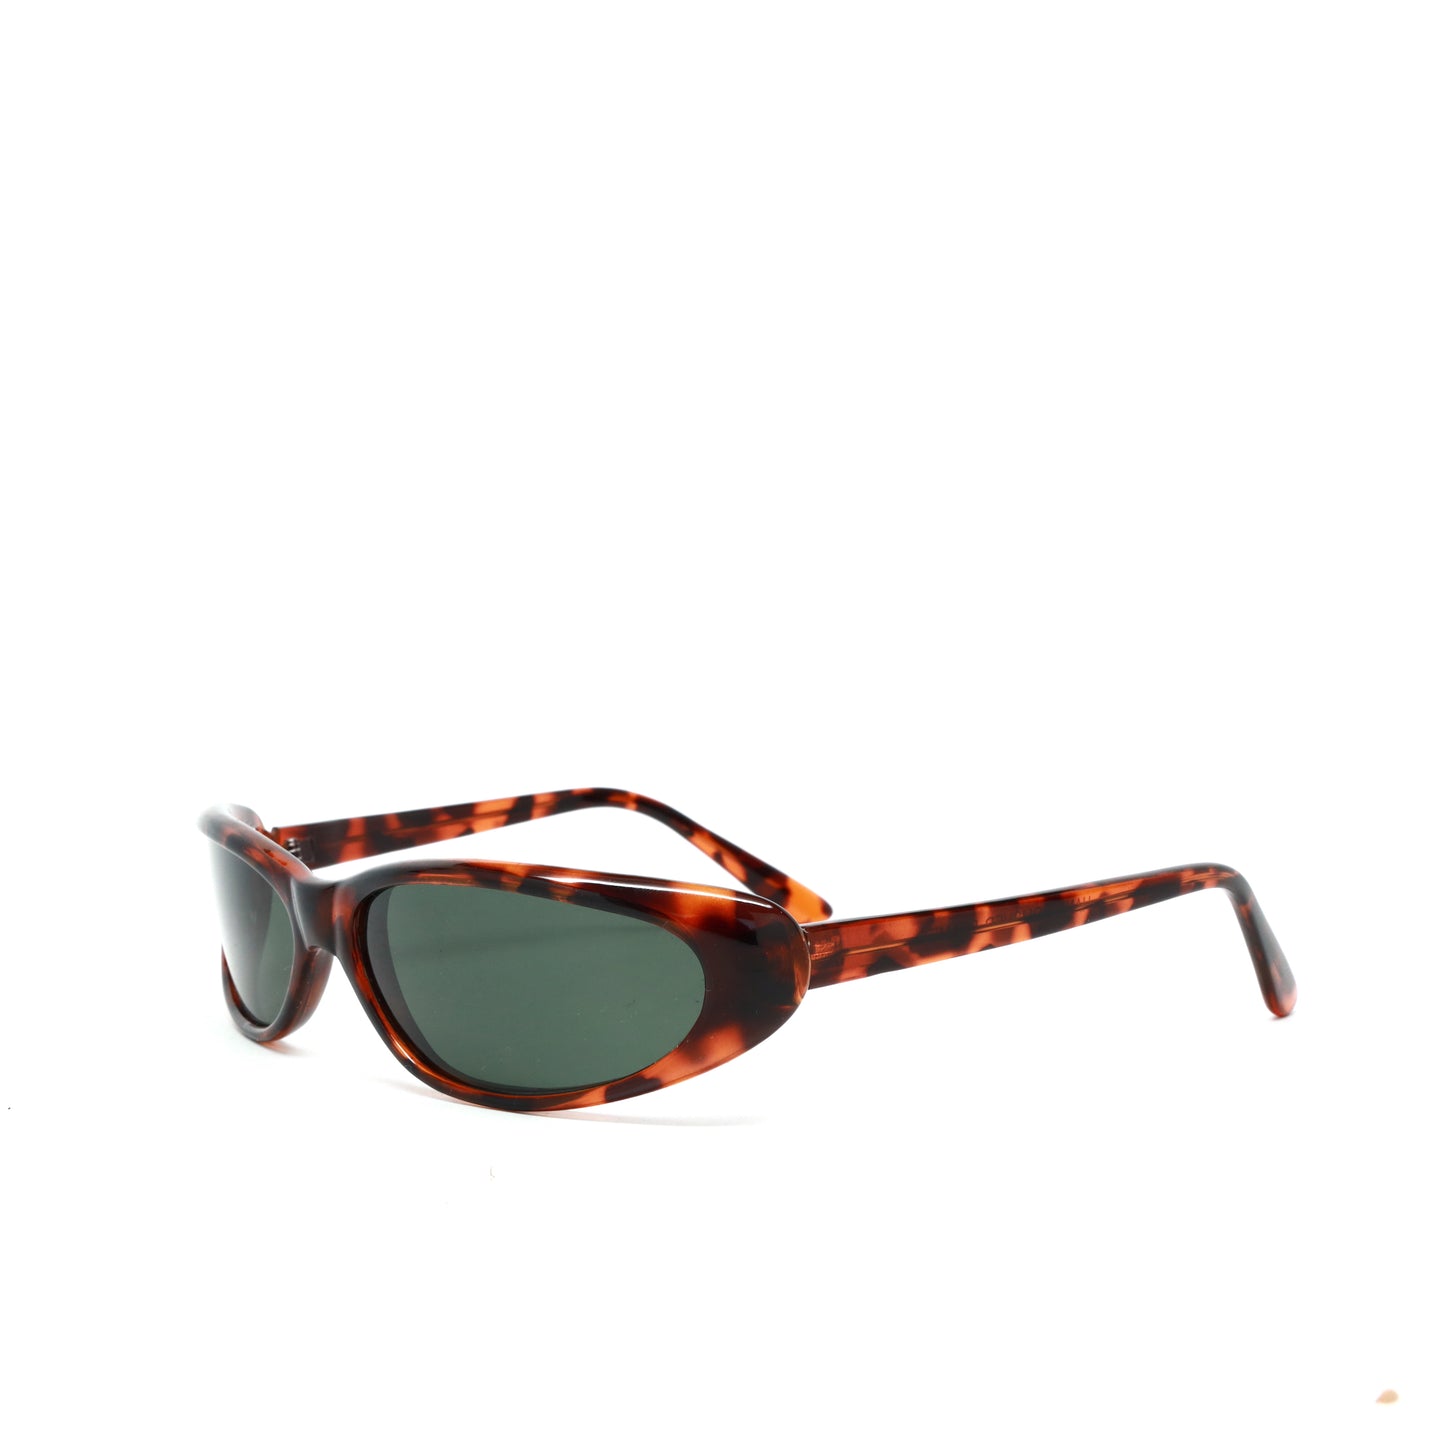 Vintage Standard Size Slim Narrow Oval Frame Sunglasses - Tortoise